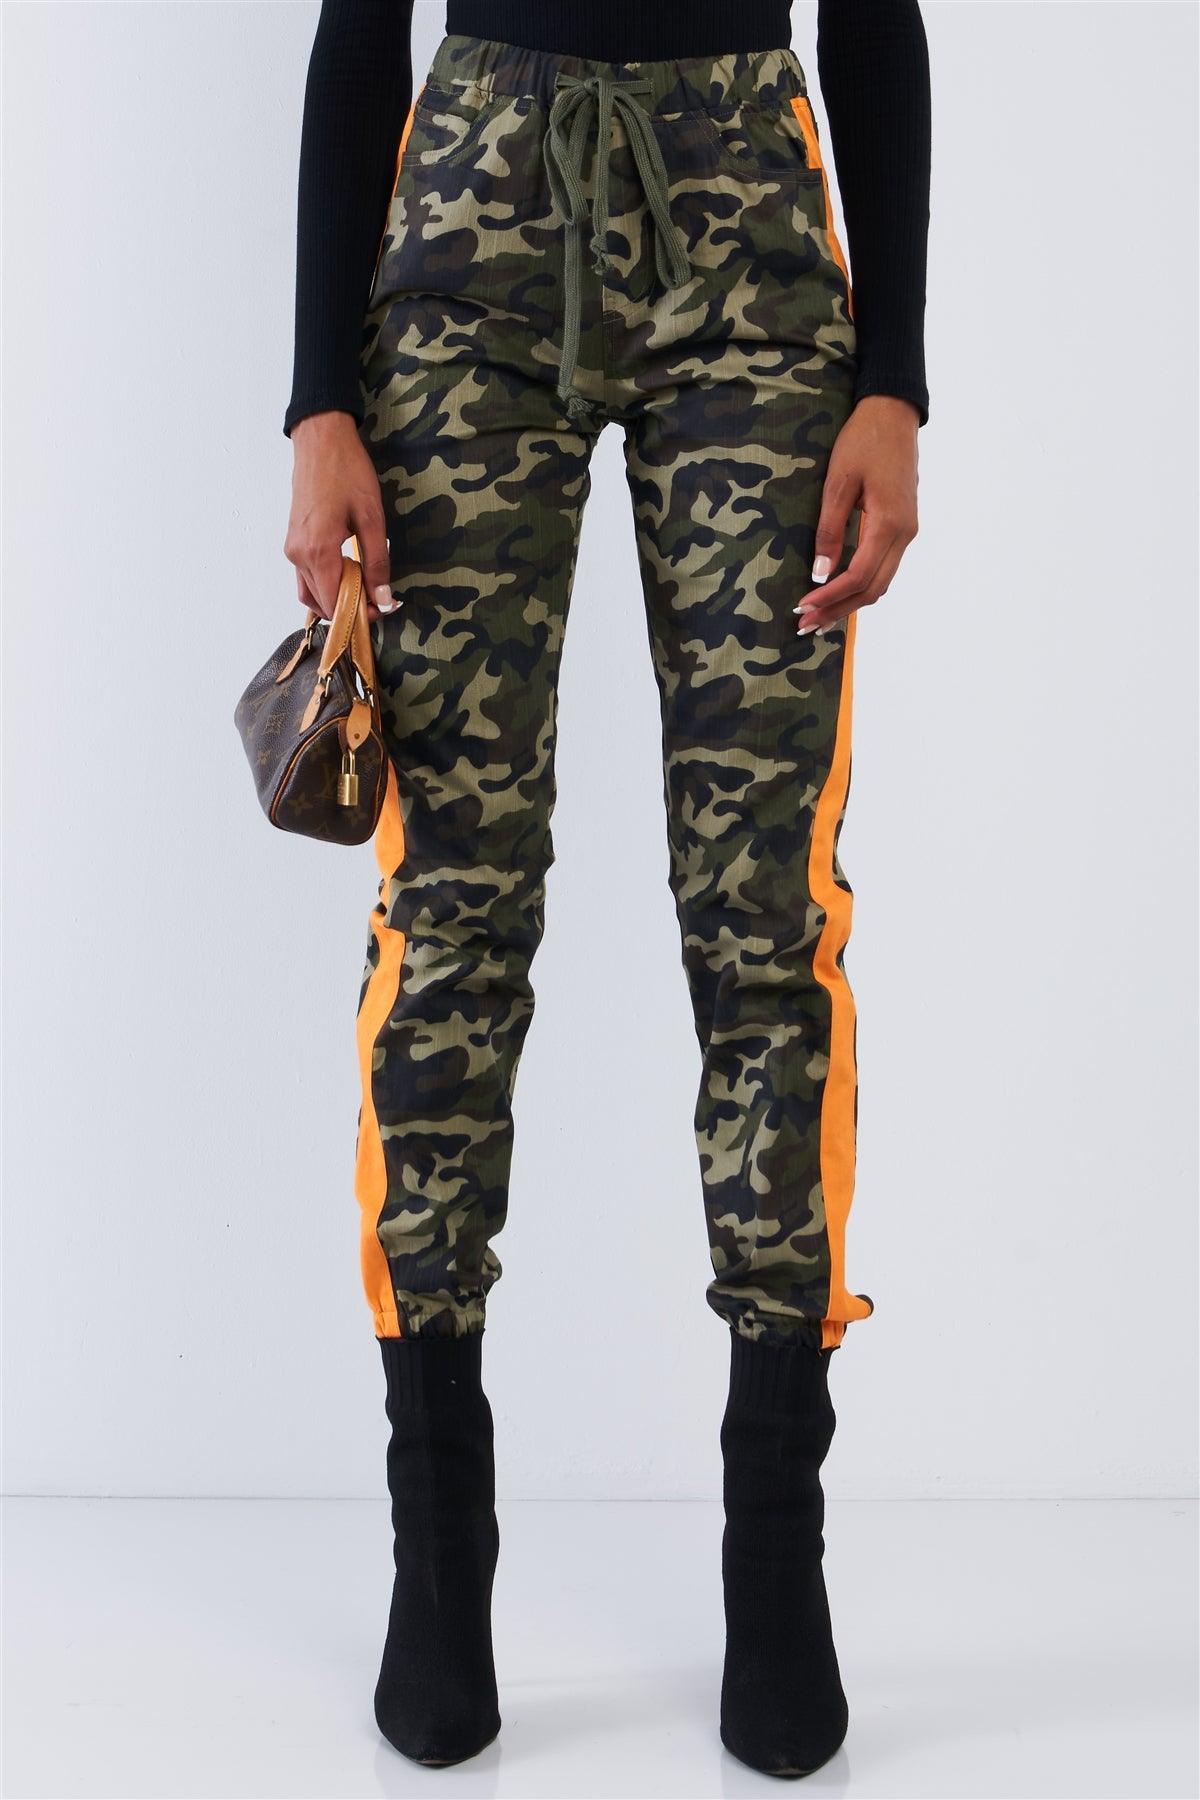 Olive Camouflage High Waisted Orange Striped Elastic Waist Draw String Cargo Pants /2-2-2